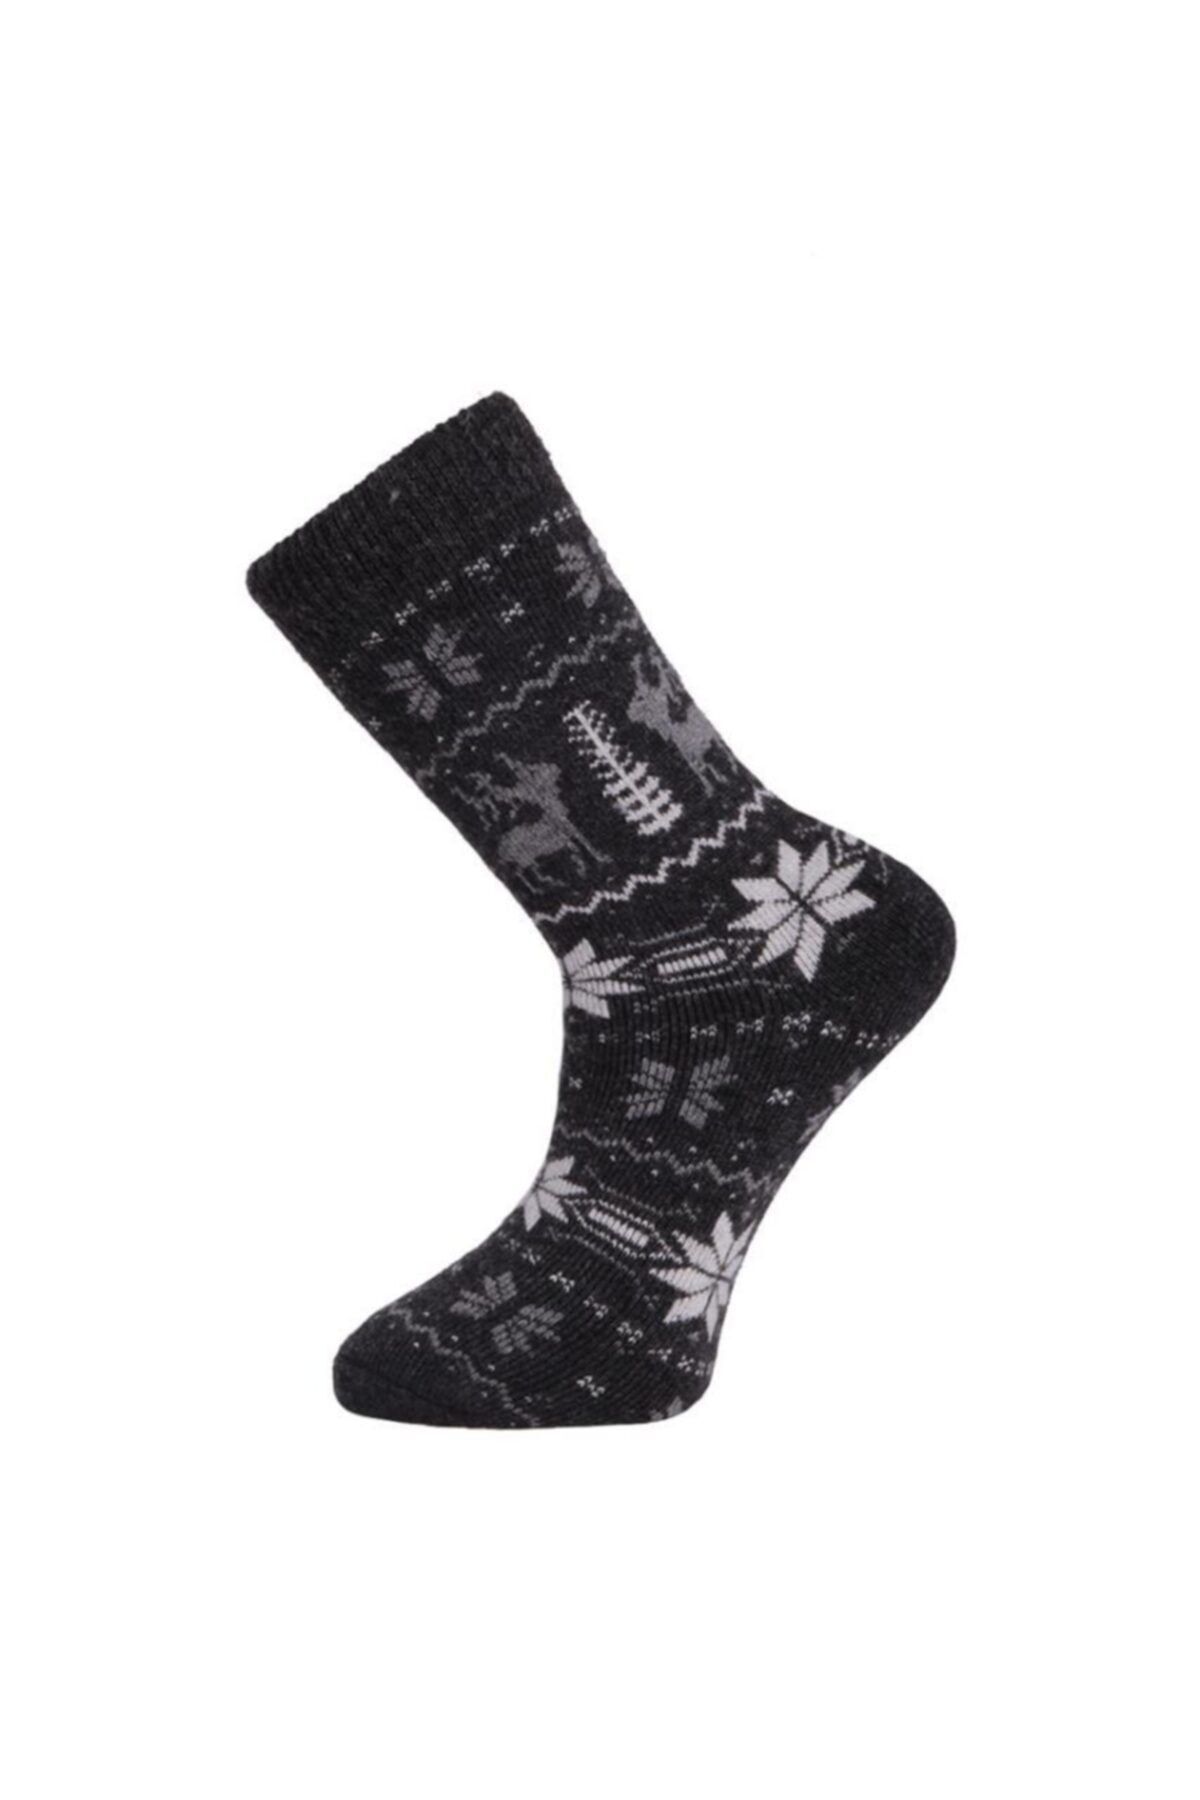 Panthzer Casual Wool Erkek Çorap Siyah